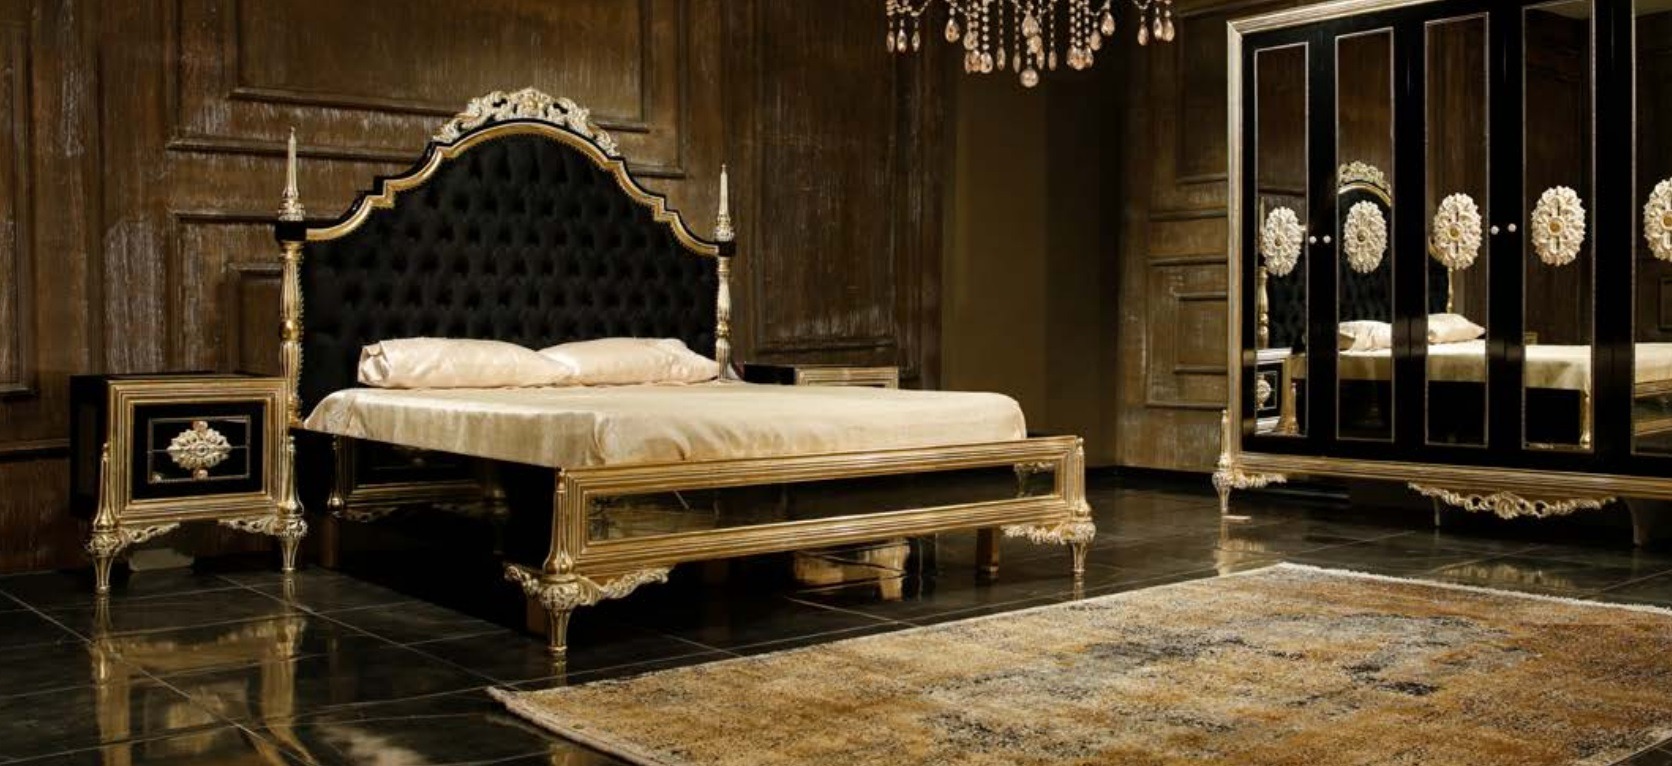 Luxus Bett Klassische Betten Bettgestelle Doppelbett Chesterfield